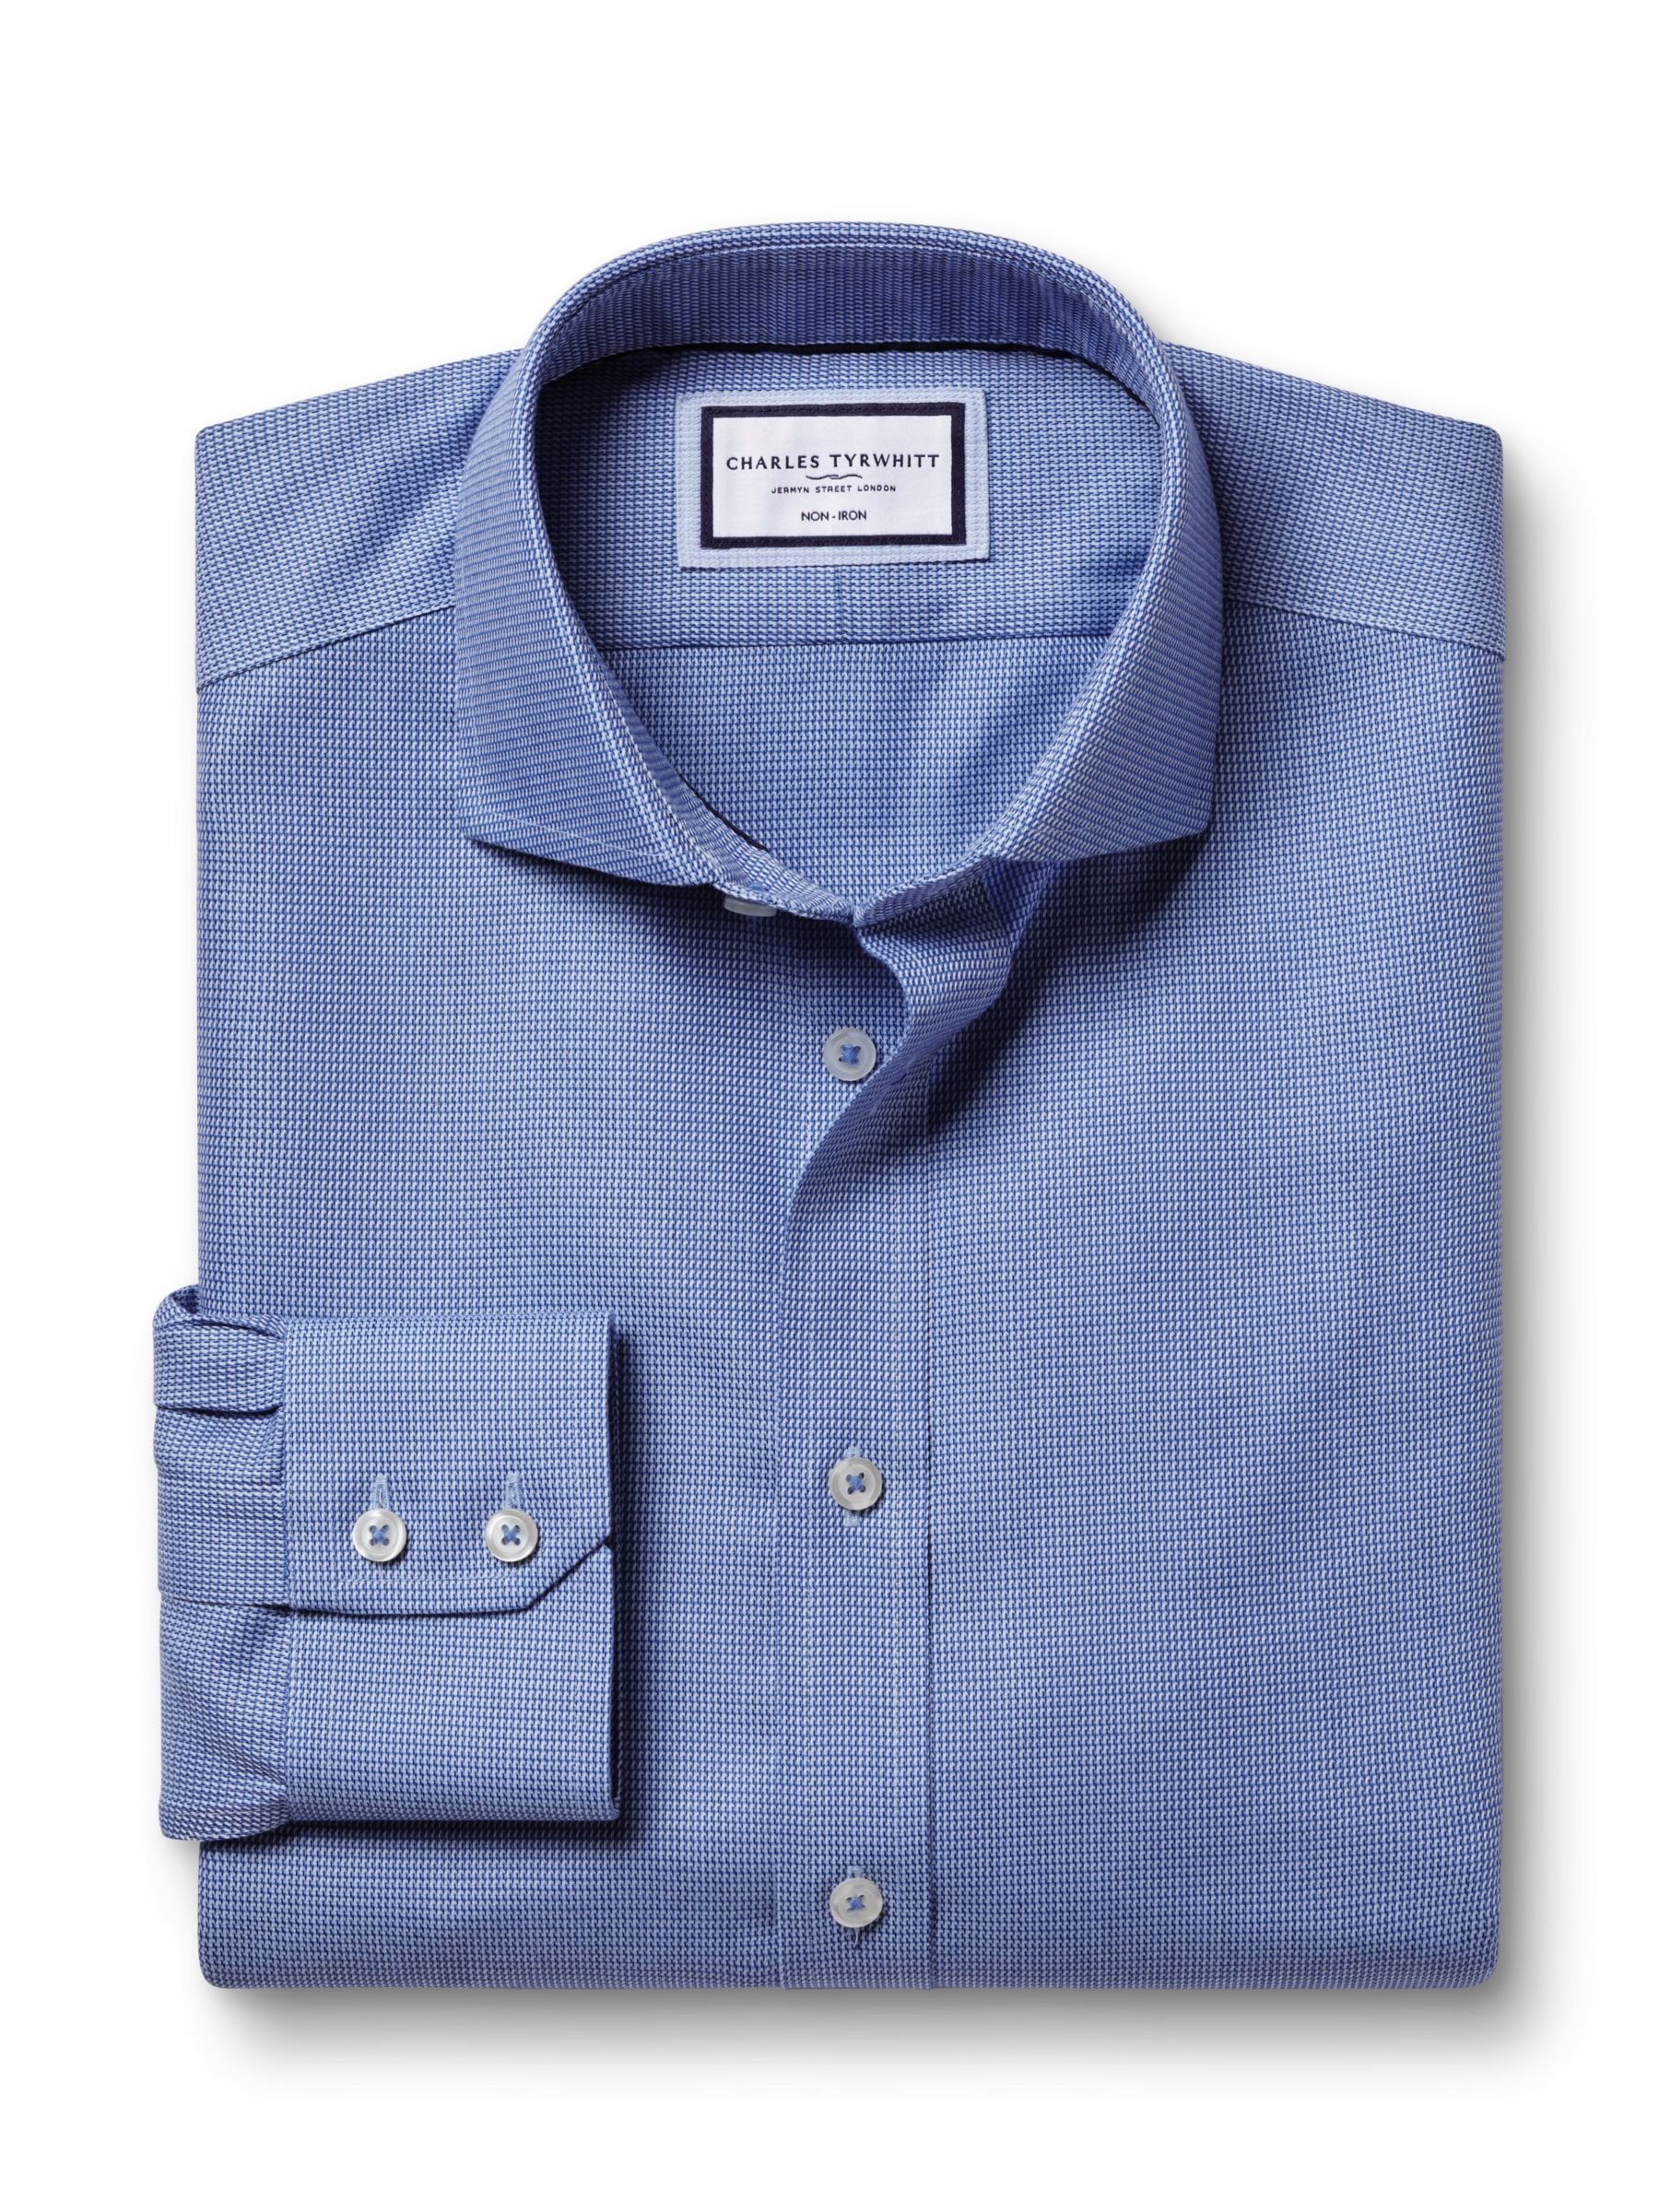 Charles Tyrwhitt Non-Iron Mayfair Textured Dobby Weave Shirt, Cobalt Blue, 14.5